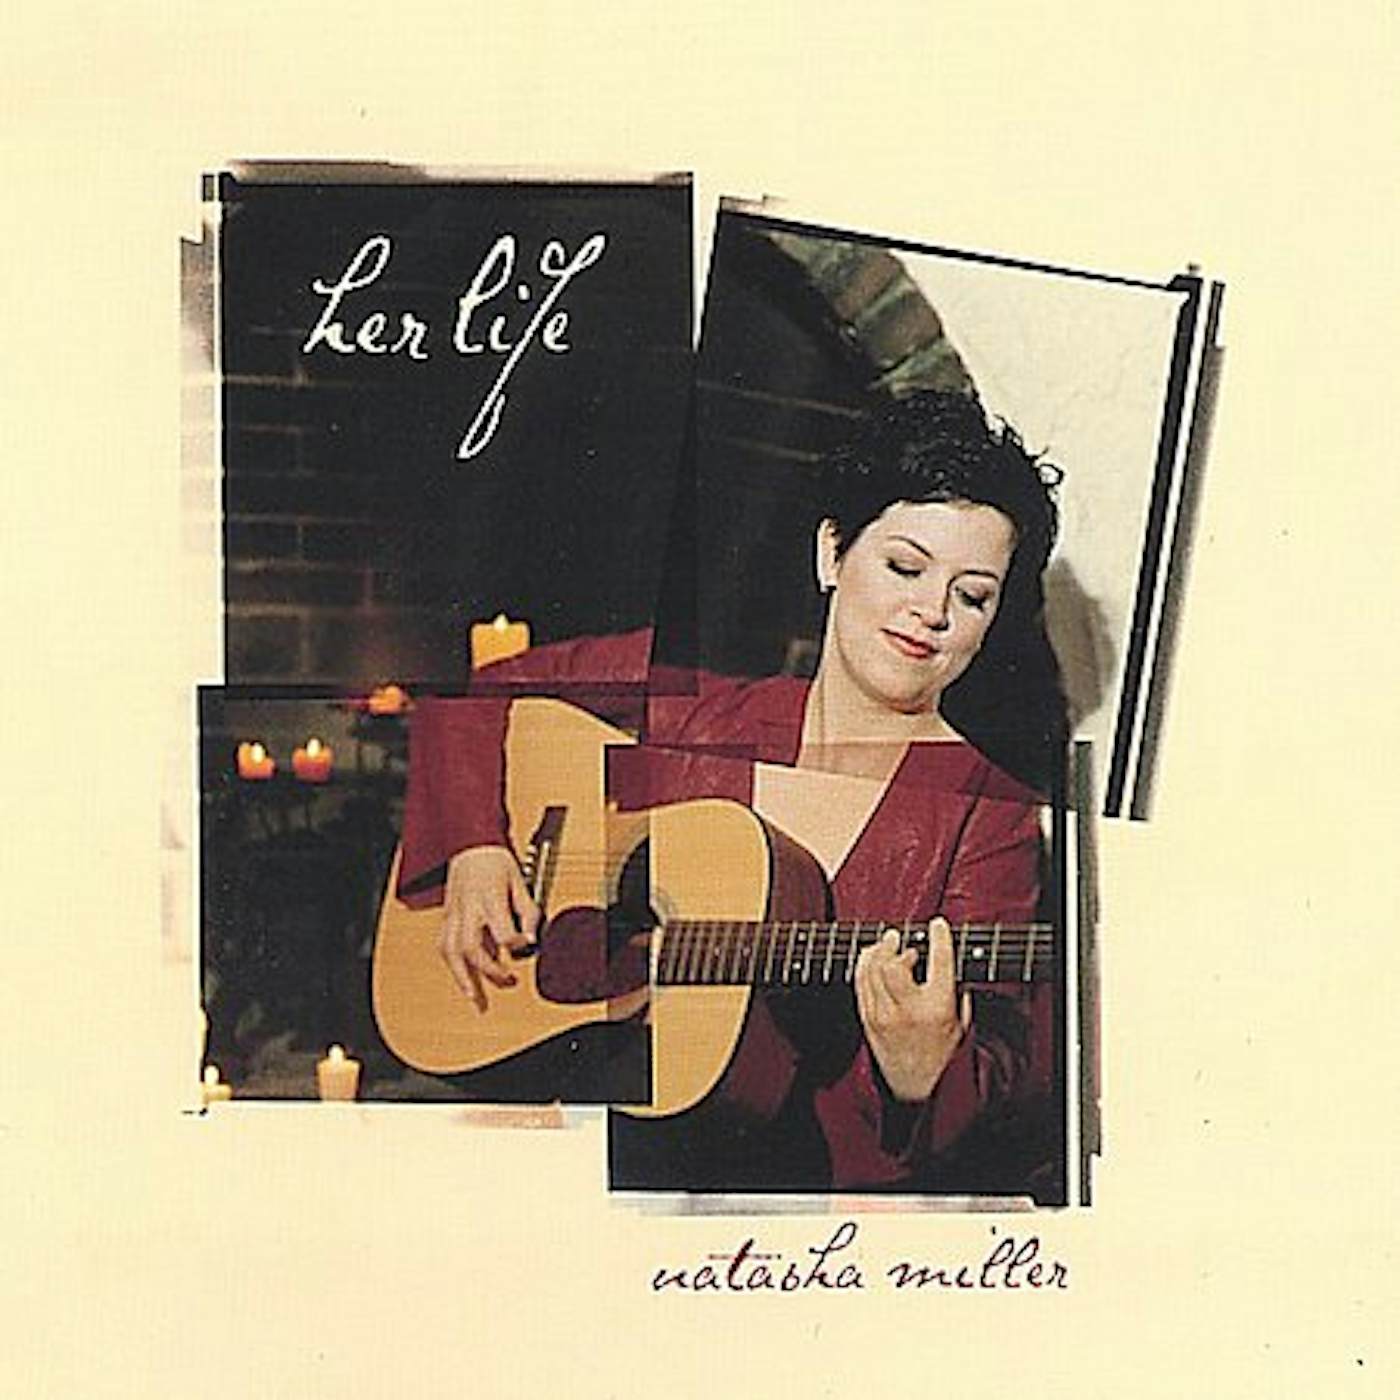 Natasha Miller HER LIFE CD